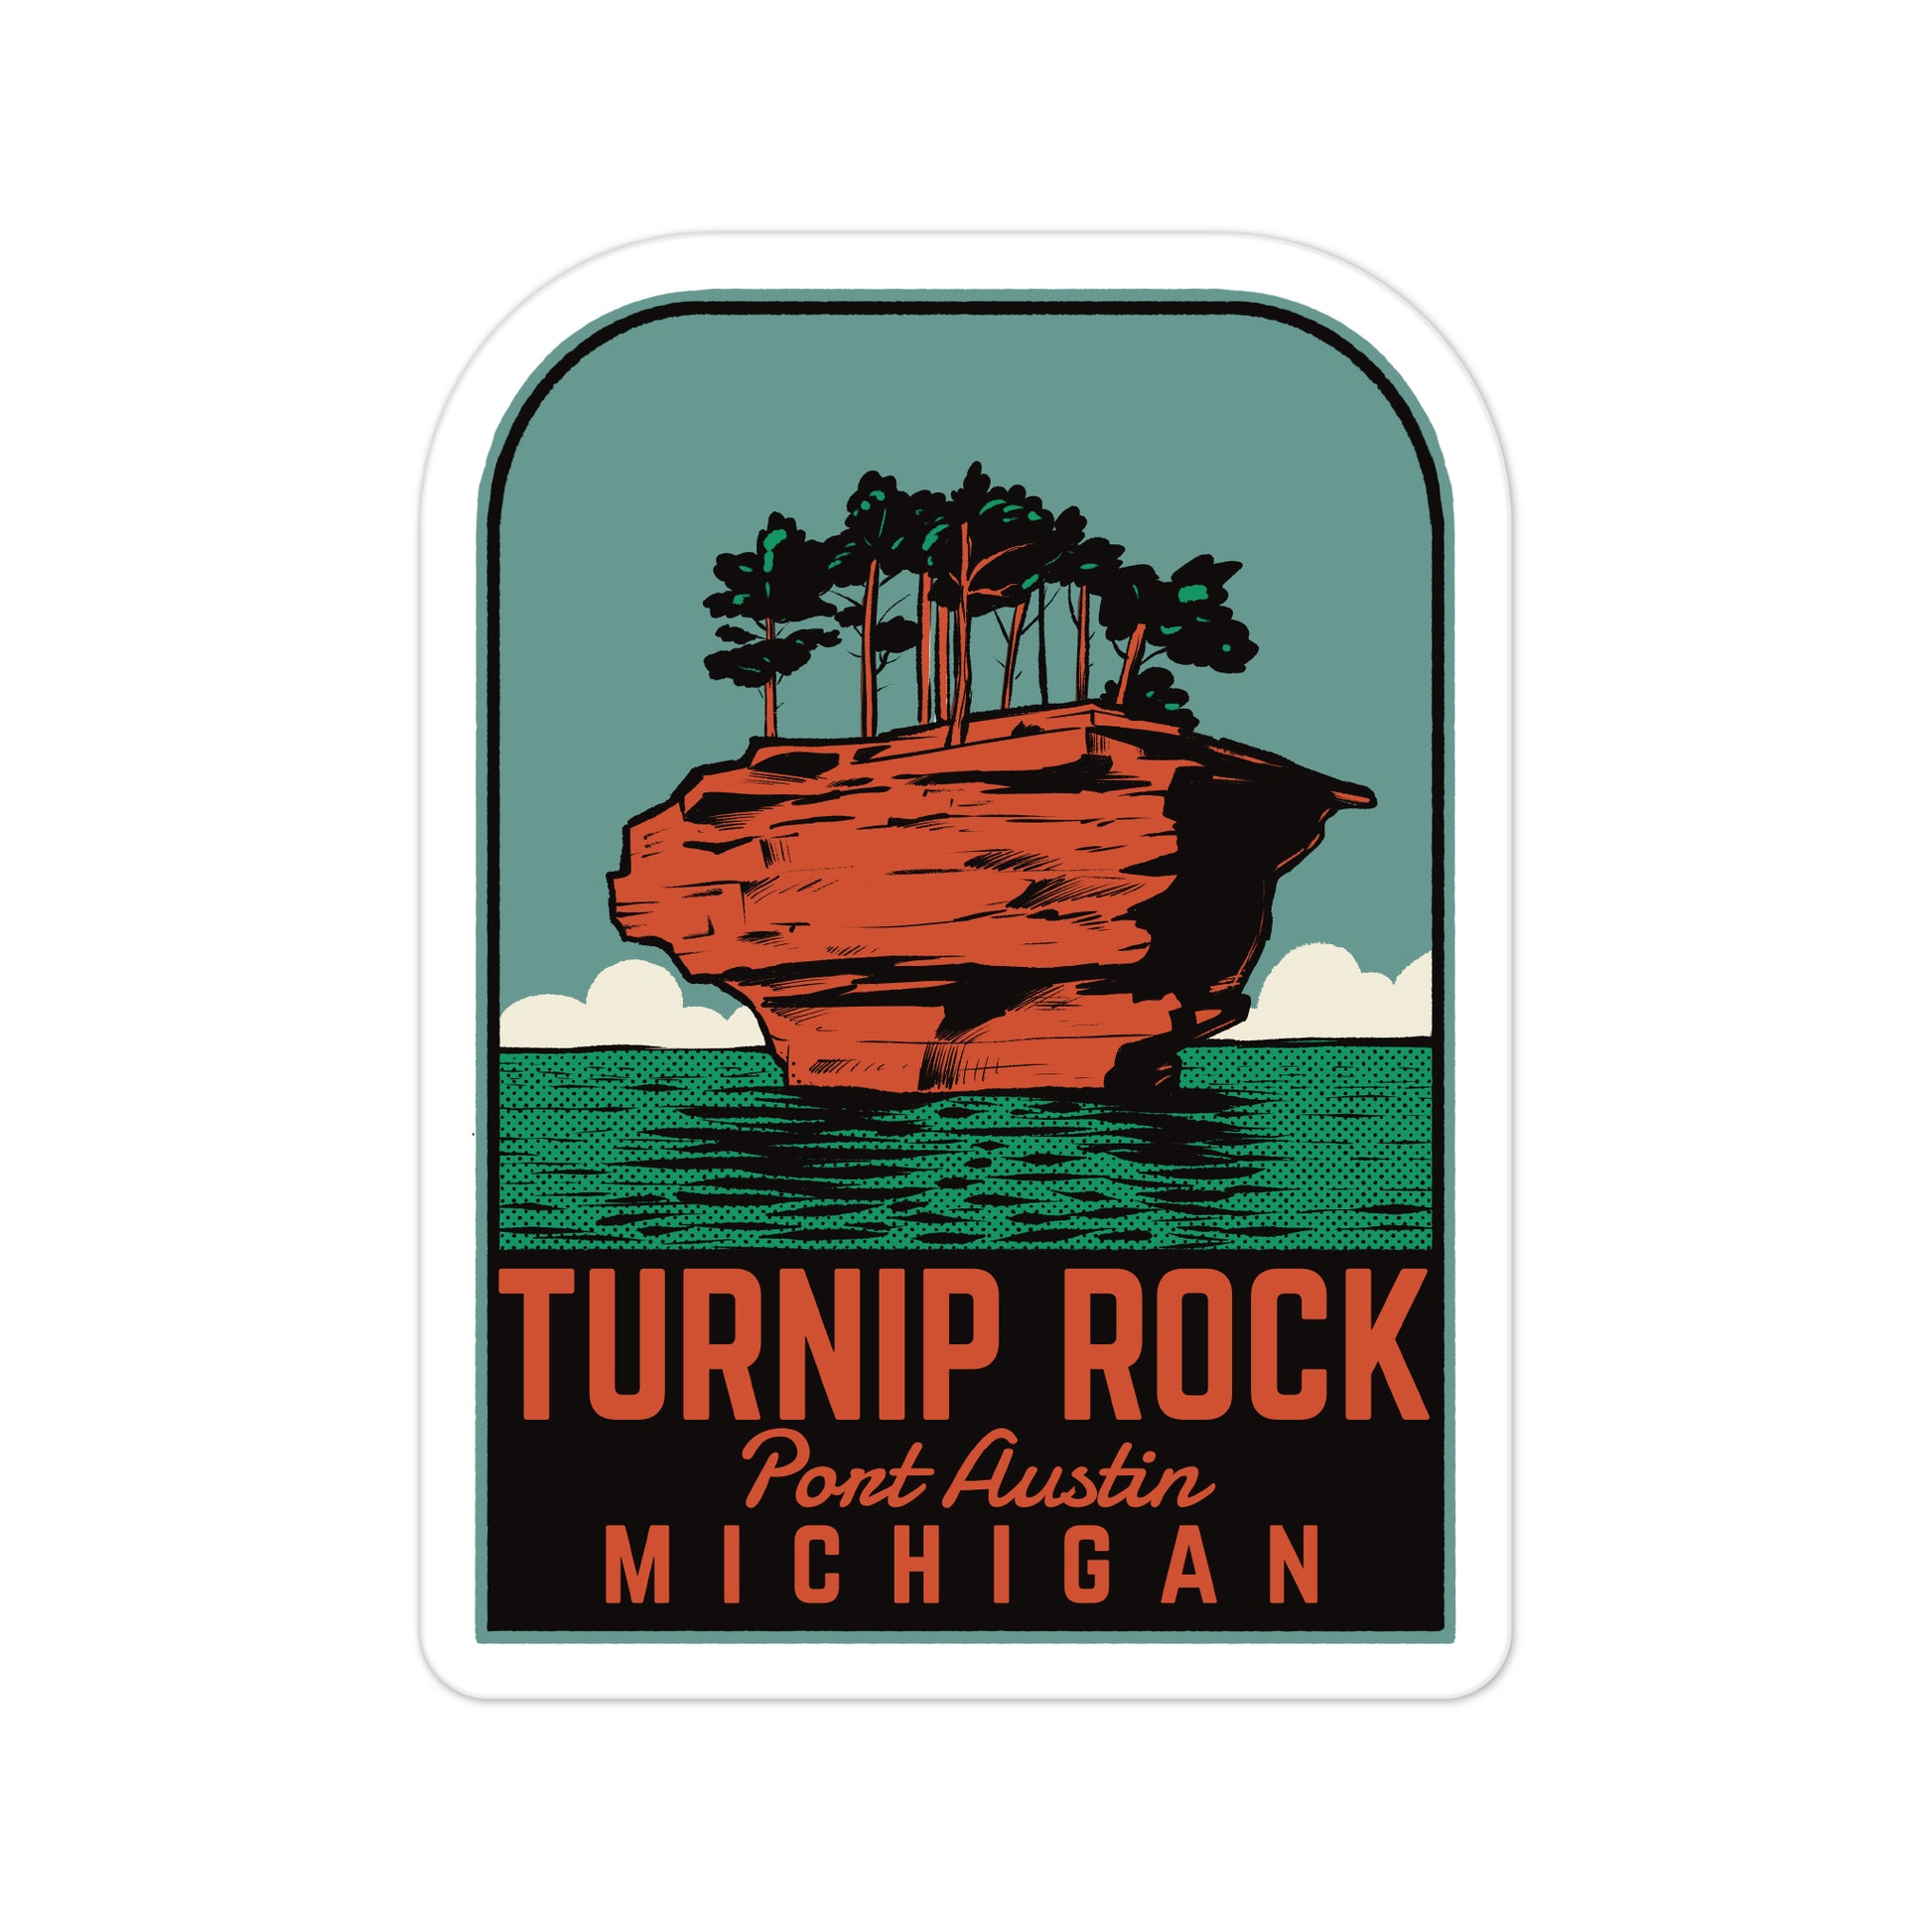 A sticker of Turnip Rock Michigan